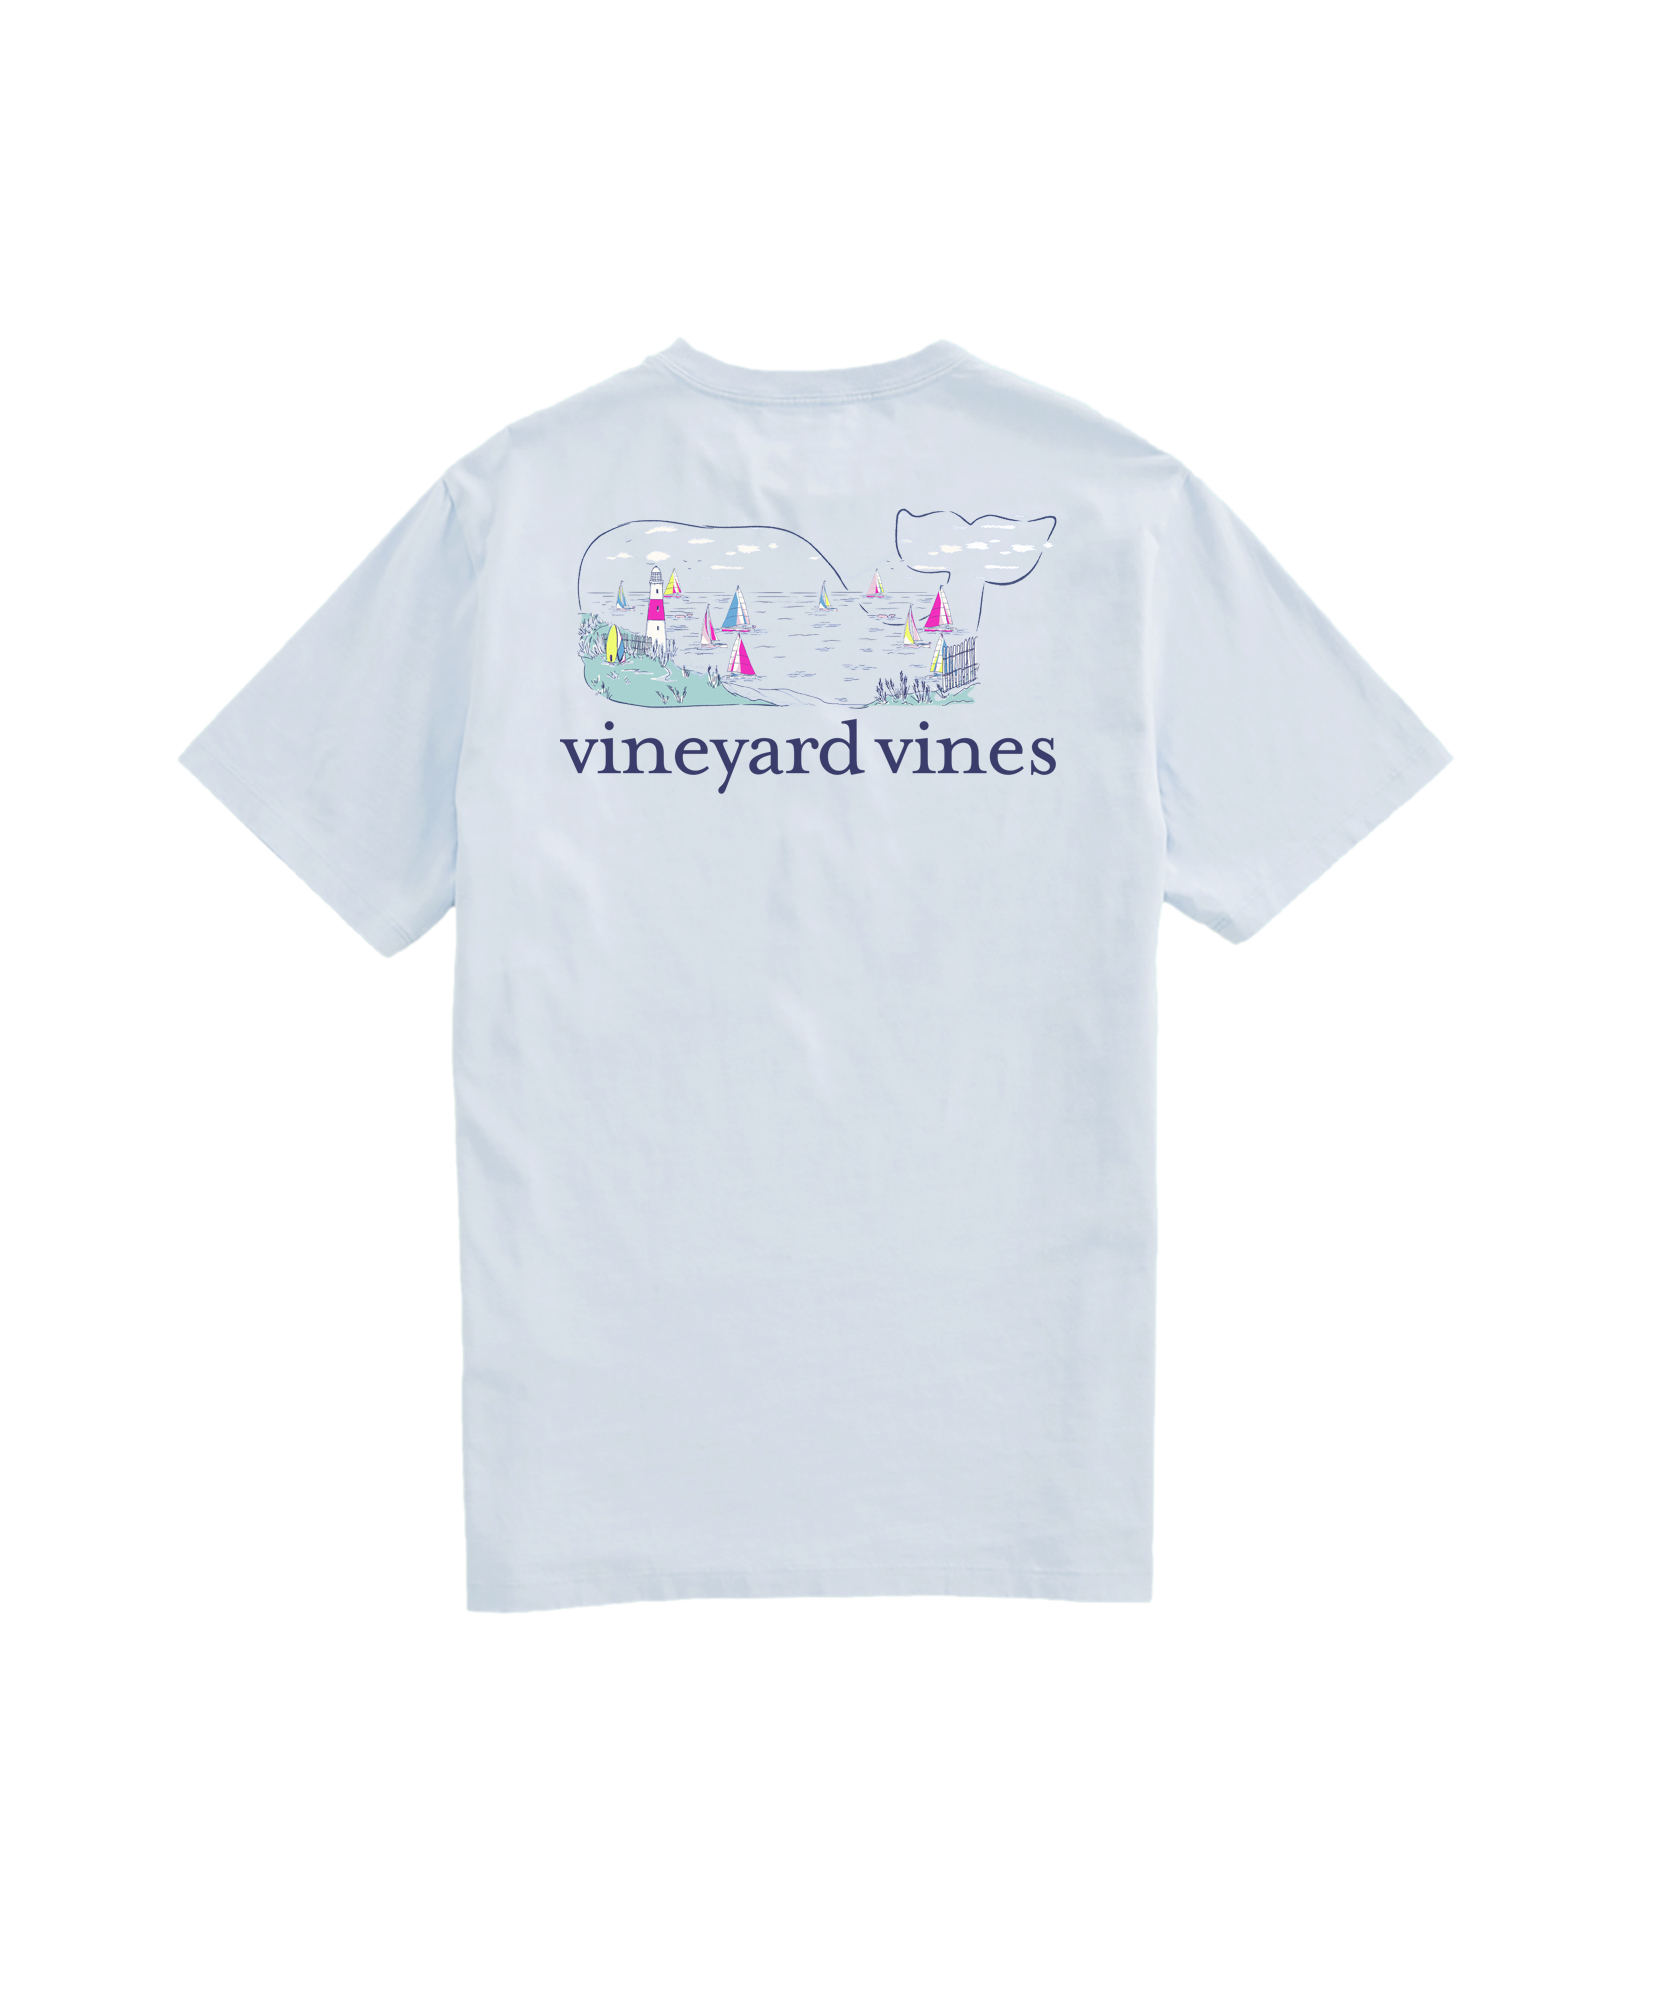 Shop Short-Sleeve Holiday Print Whale Pocket Tee at vineyard vines